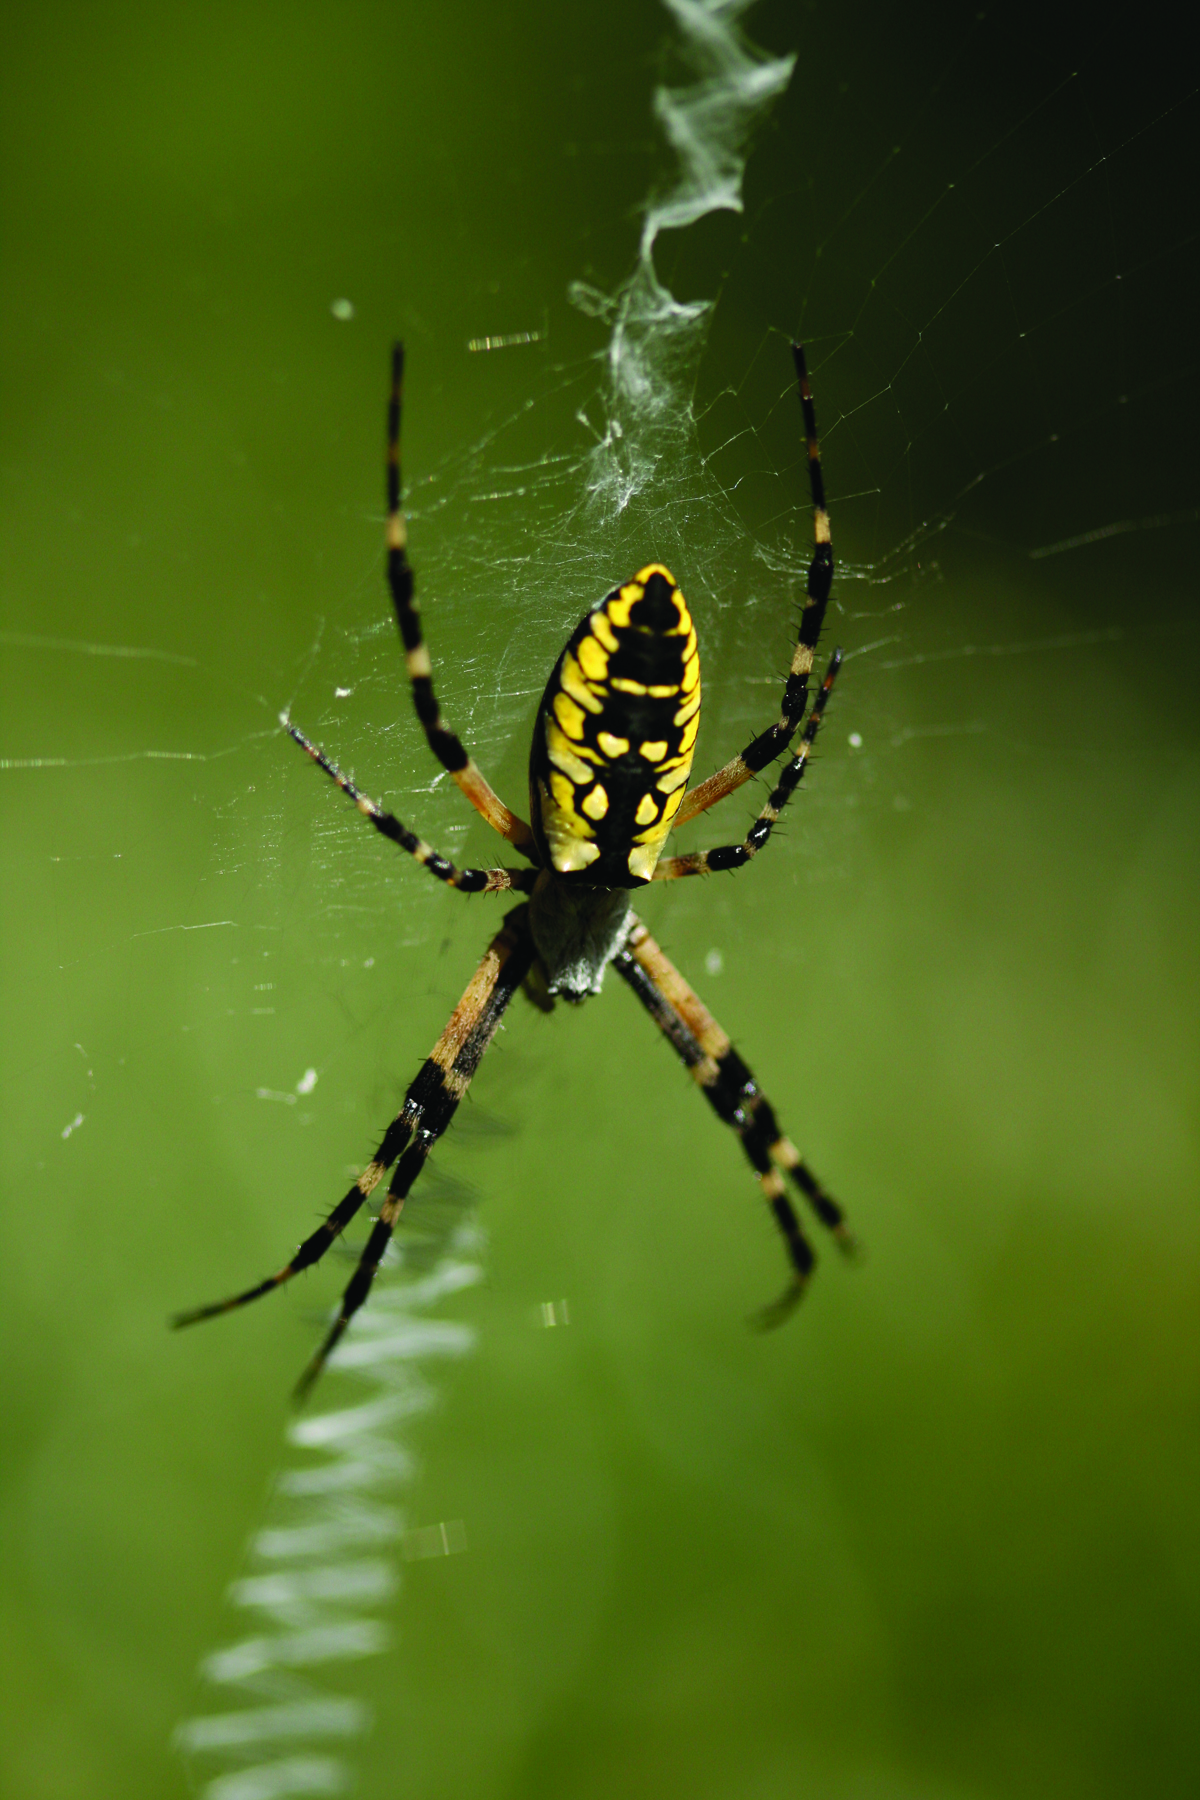 Spiders pictures. Желтый Спайдер паук. Зеленый ядовитый паук. Зеленый паук кругопряд. Зелено черный паук.